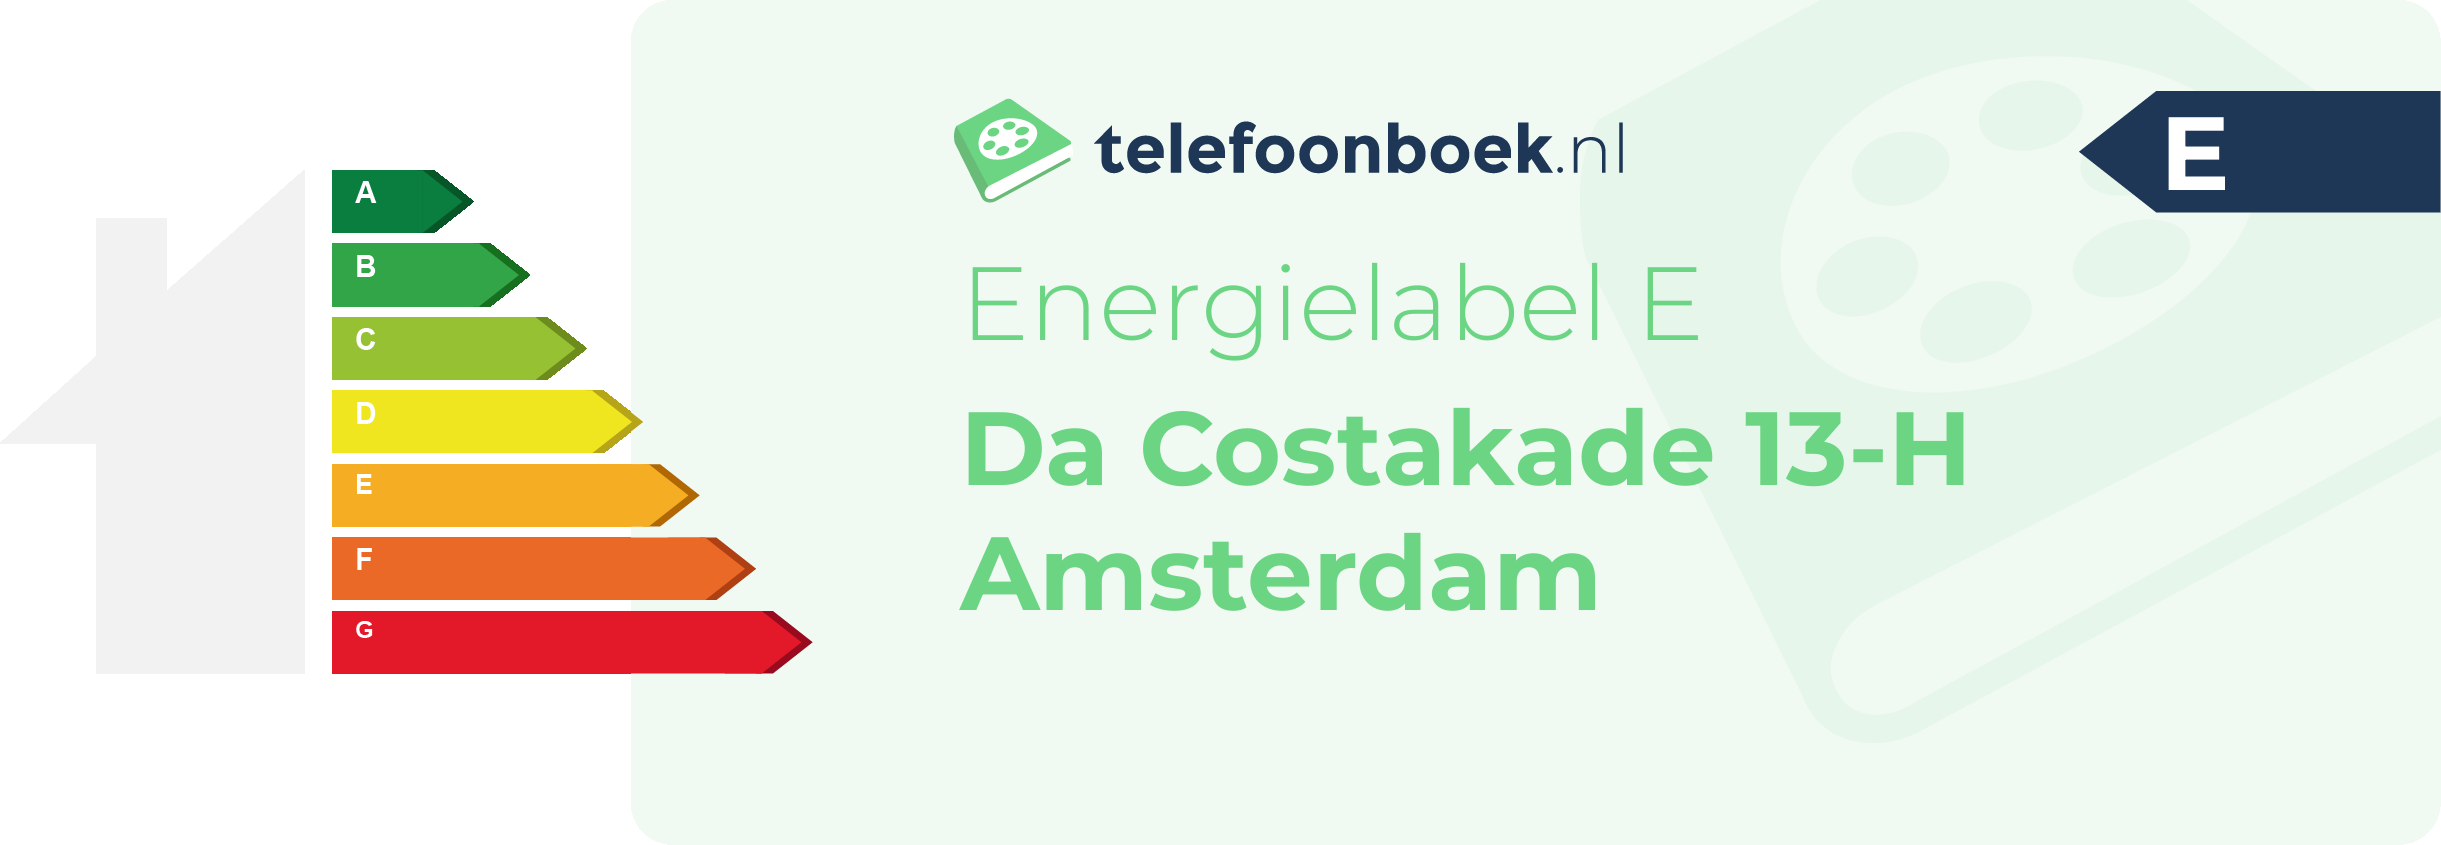 Energielabel Da Costakade 13-H Amsterdam